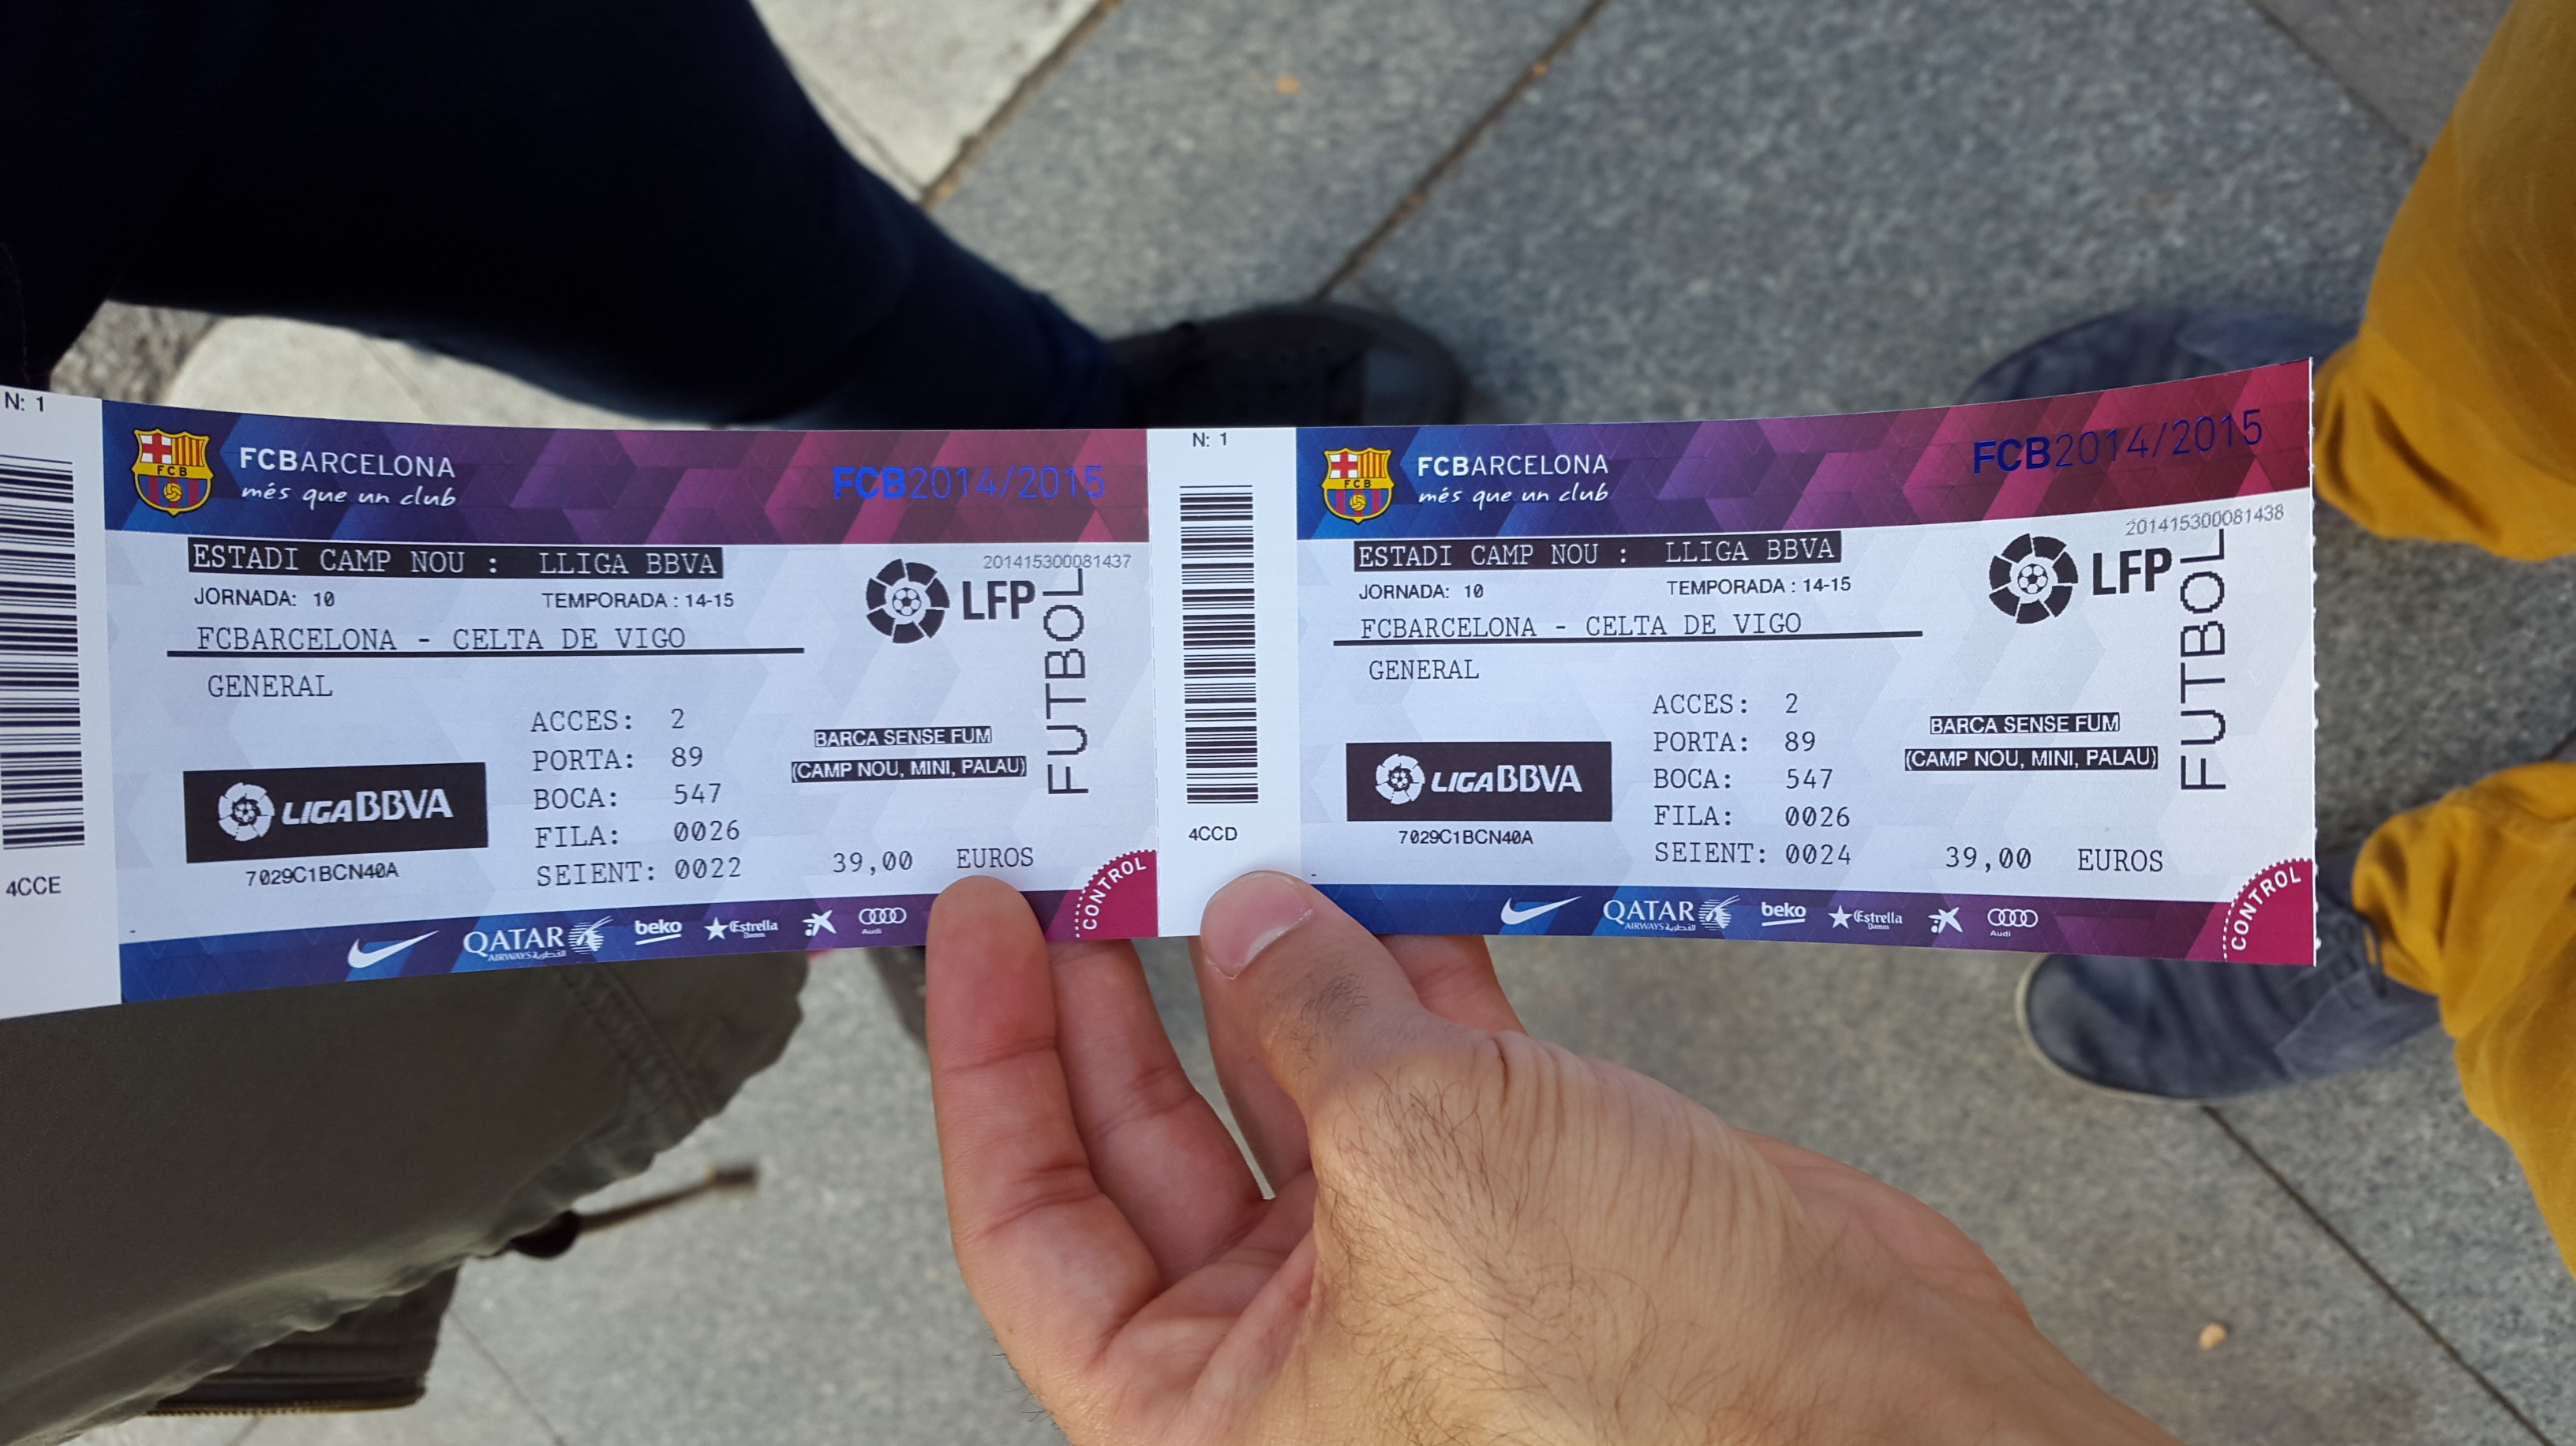 Билеты на матч барселоны. Билет на матч Барселоны. Билет на игру Барселоны. Билет до Барселоны. Билет на самолет в Барселону.